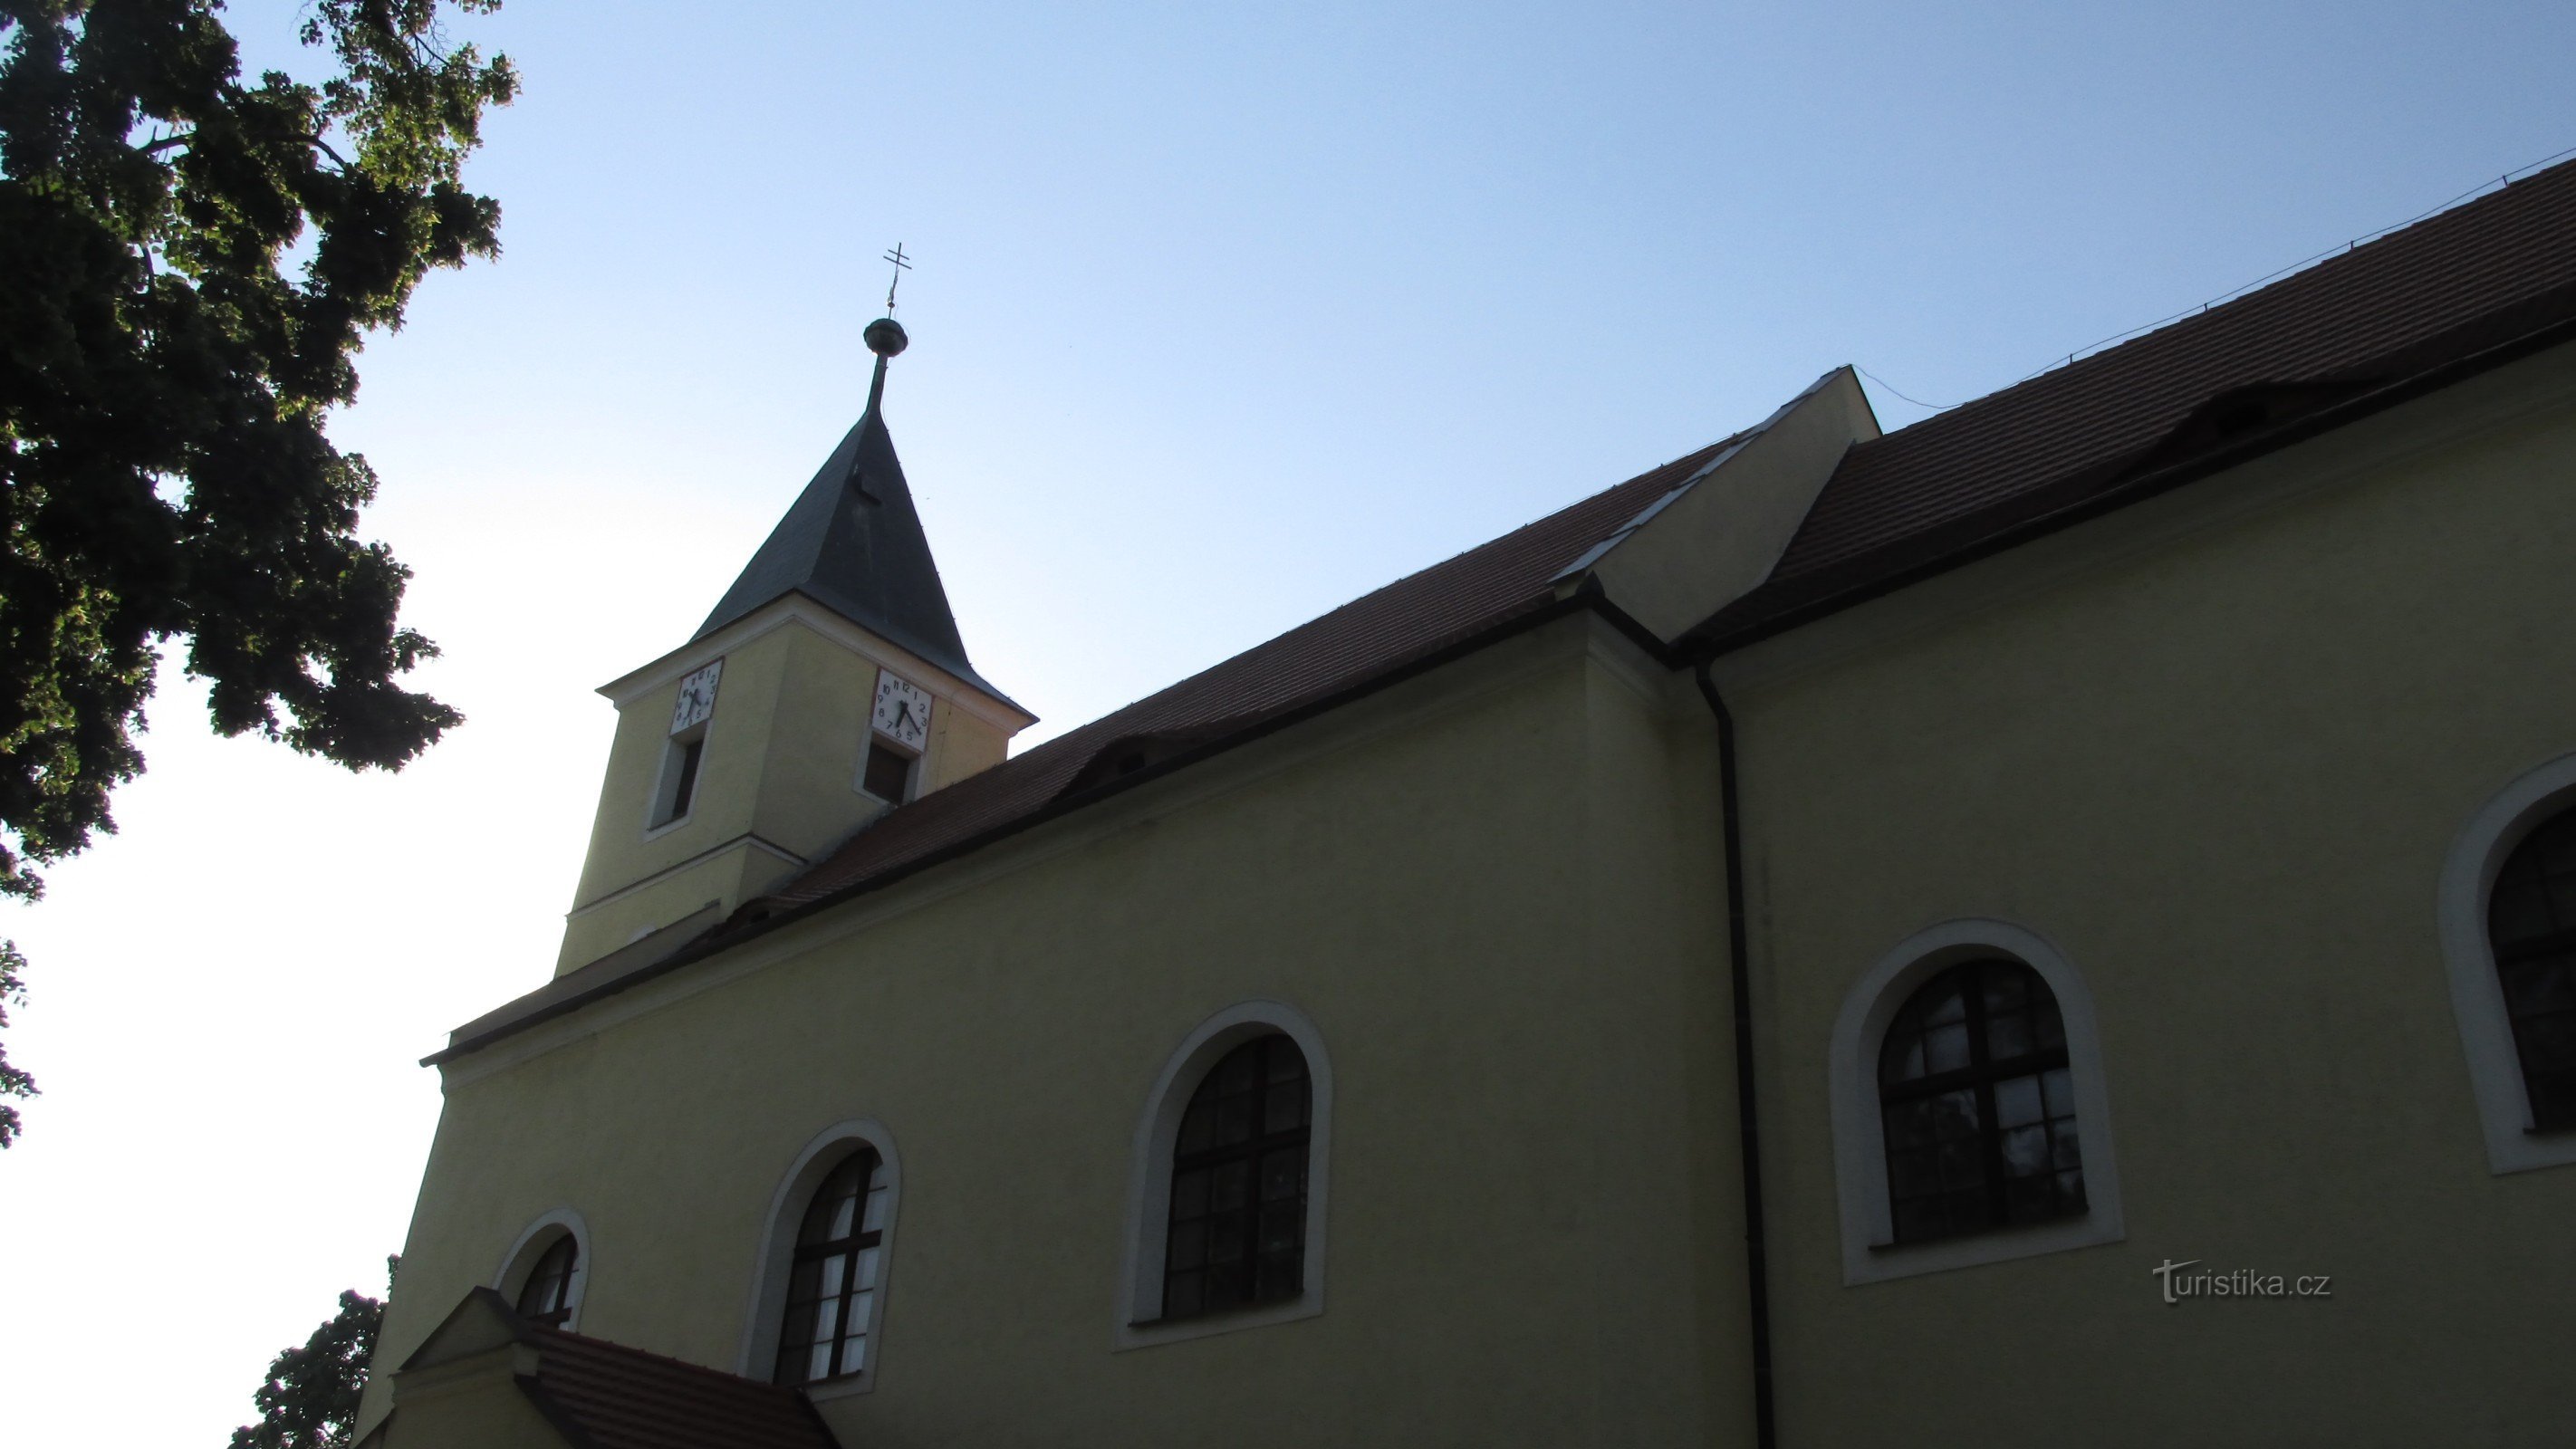 Choustník-church of the Visitation of the Virgin Mary